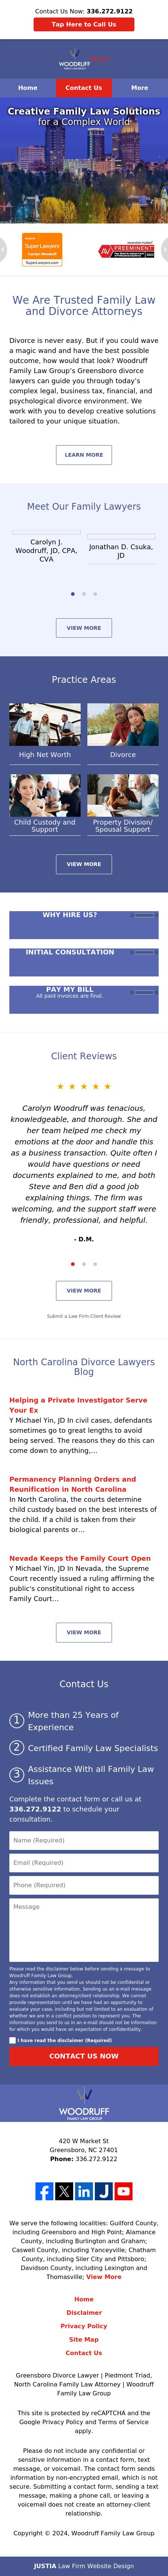 Woodruff Family Law Group - Greensboro NC Lawyers